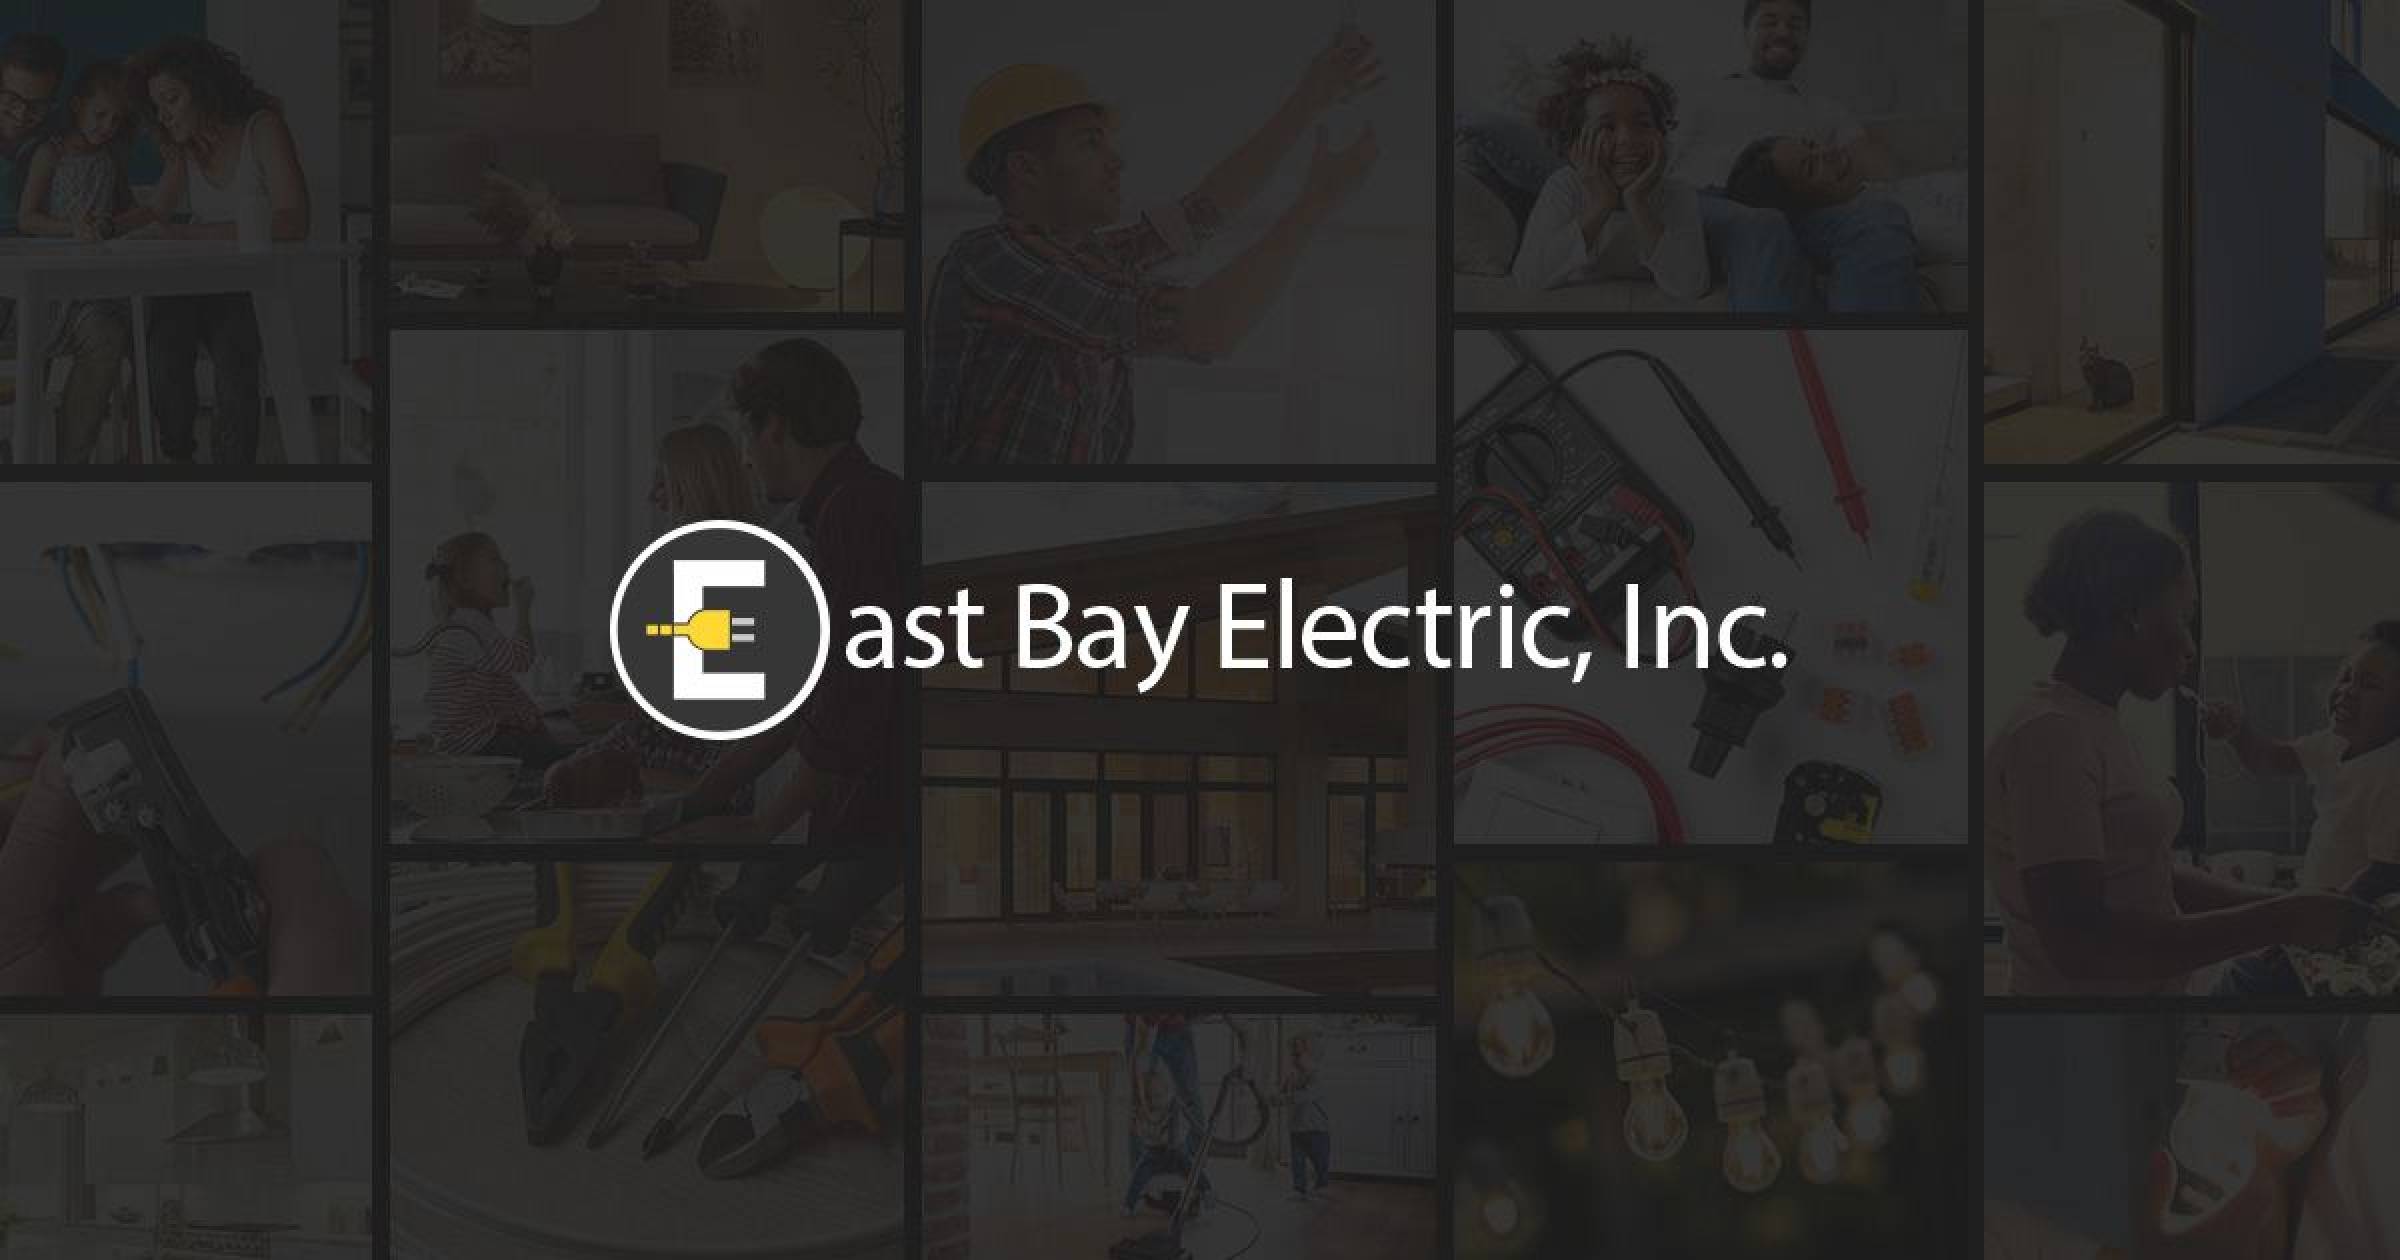 East Bay Electric, Inc.